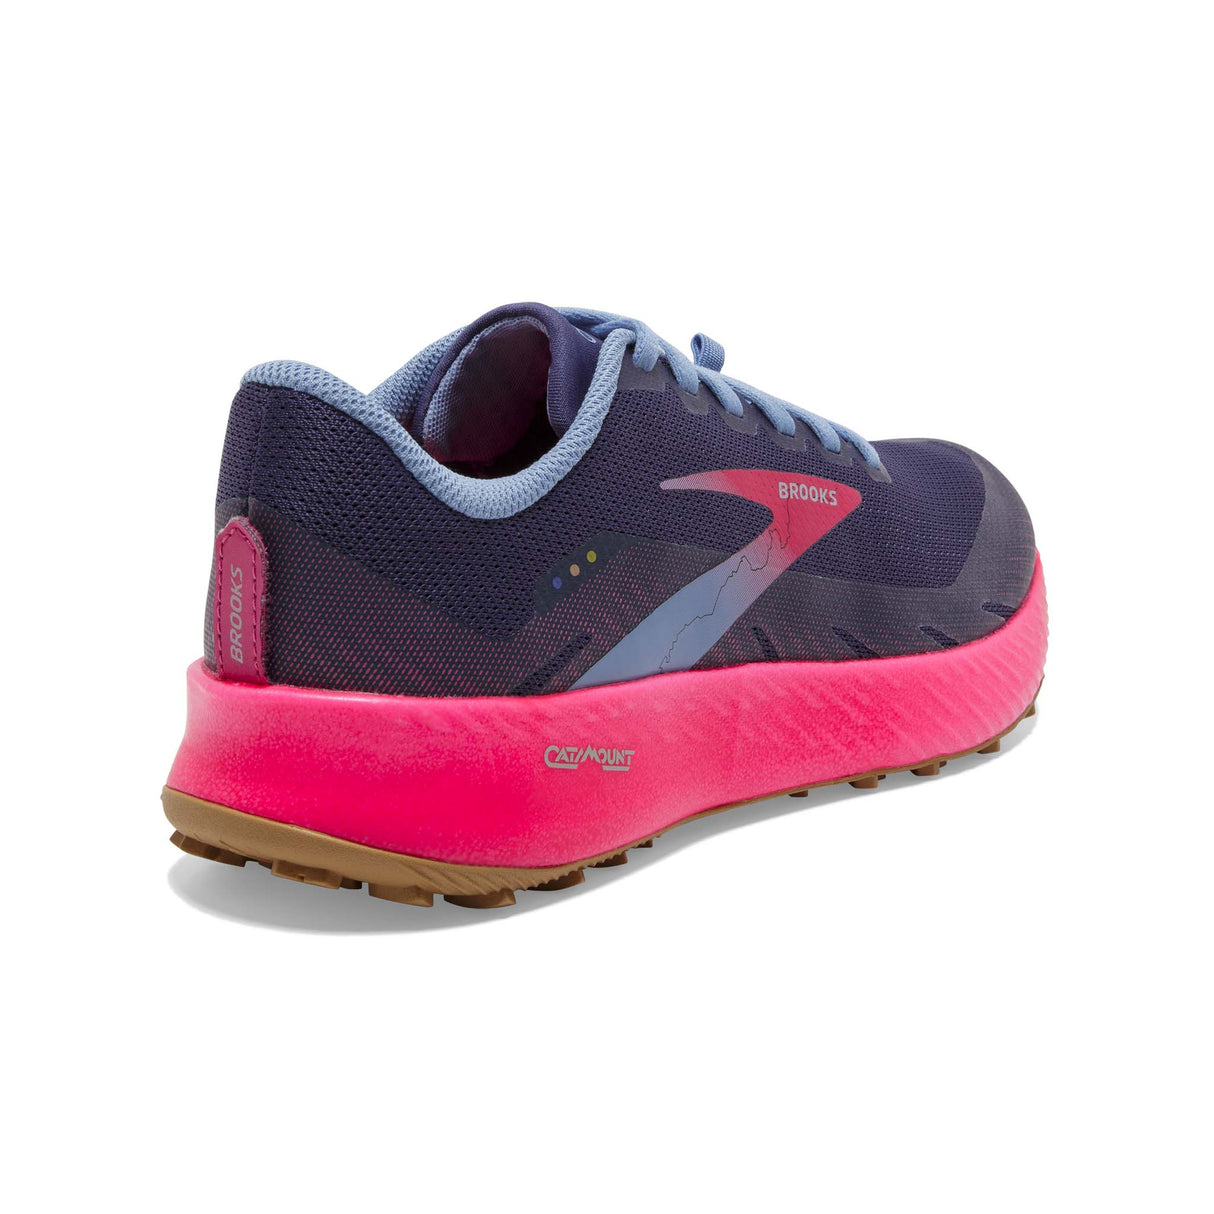 Brooks Catamount chaussures de course à pied trail femme deep cobalt diva pink oyster mushroom talon